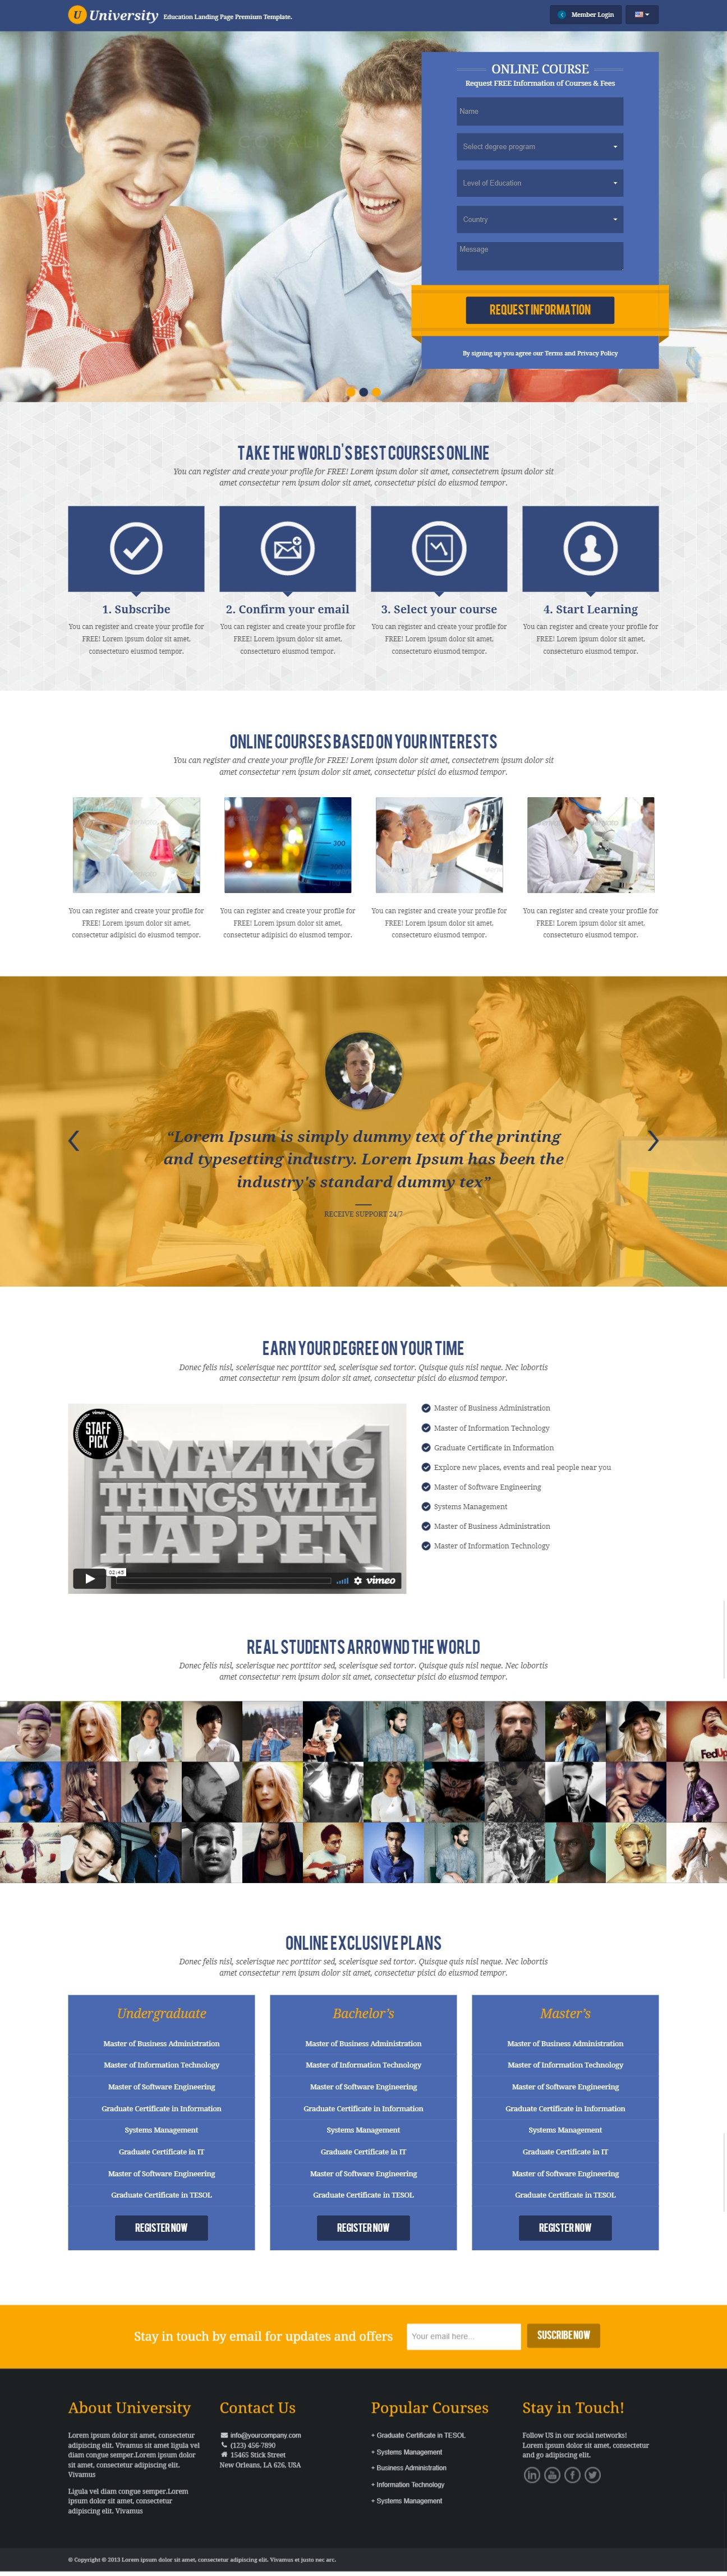 mẫu giao diện website giáo dục plaza education